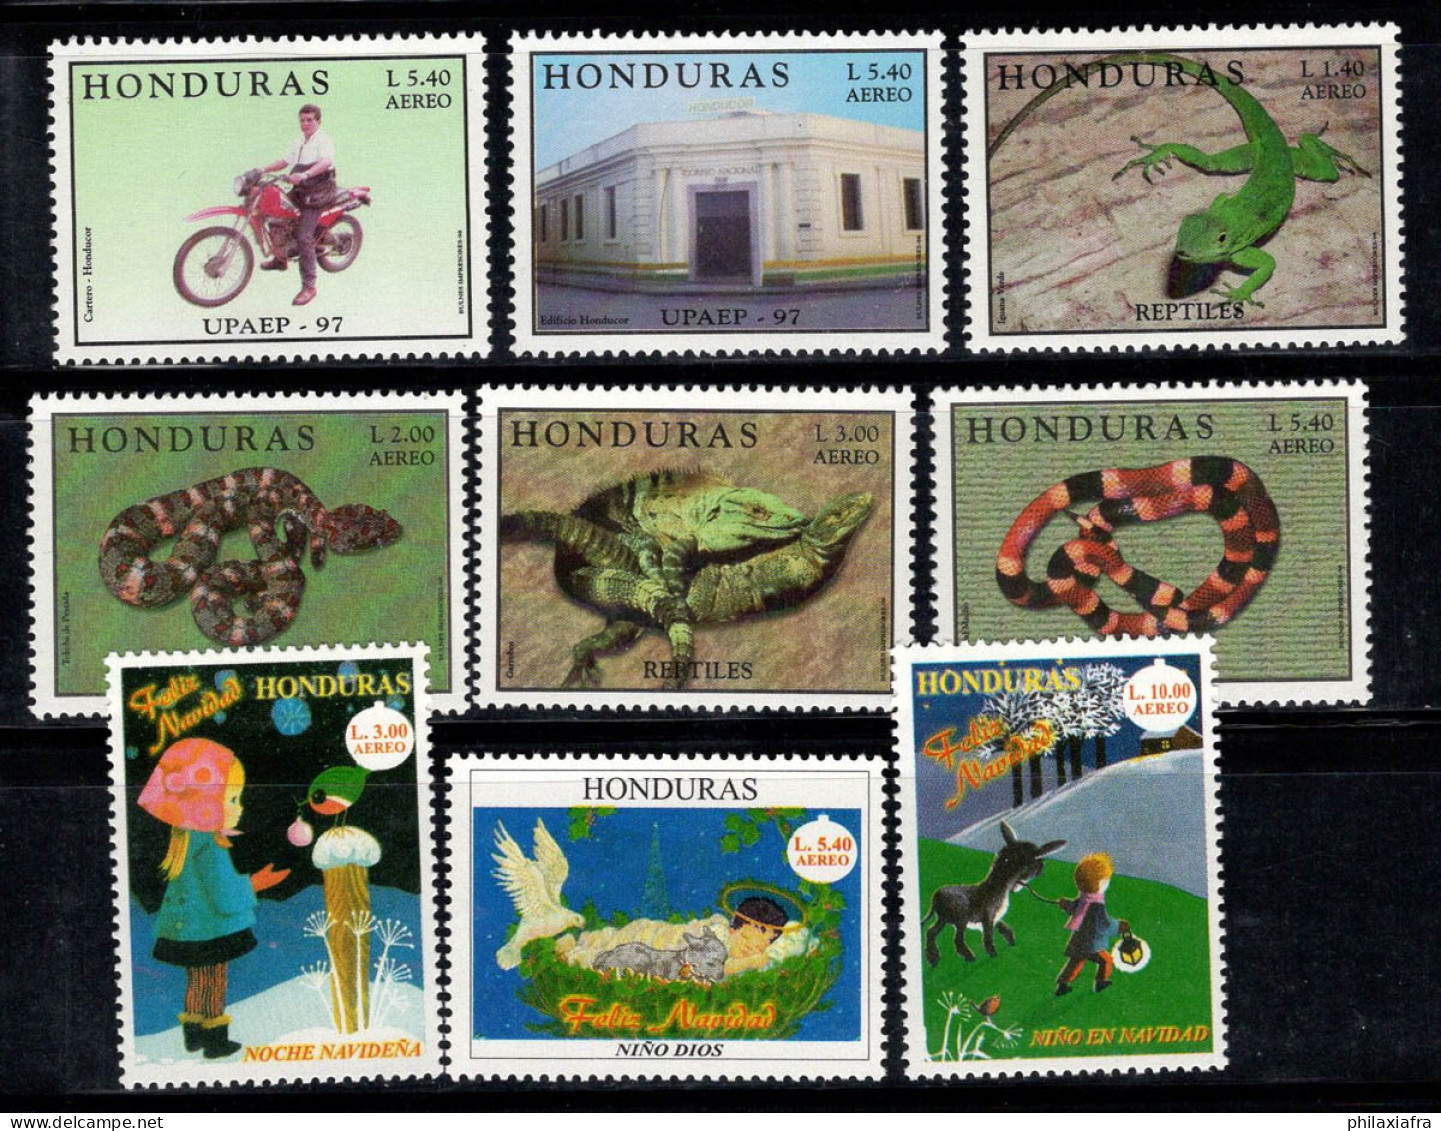 Honduras 1998 Mi. 1407,1415-1421 Neuf ** 100% Poste Aérienne Mail, Reptiles, Noël - Honduras